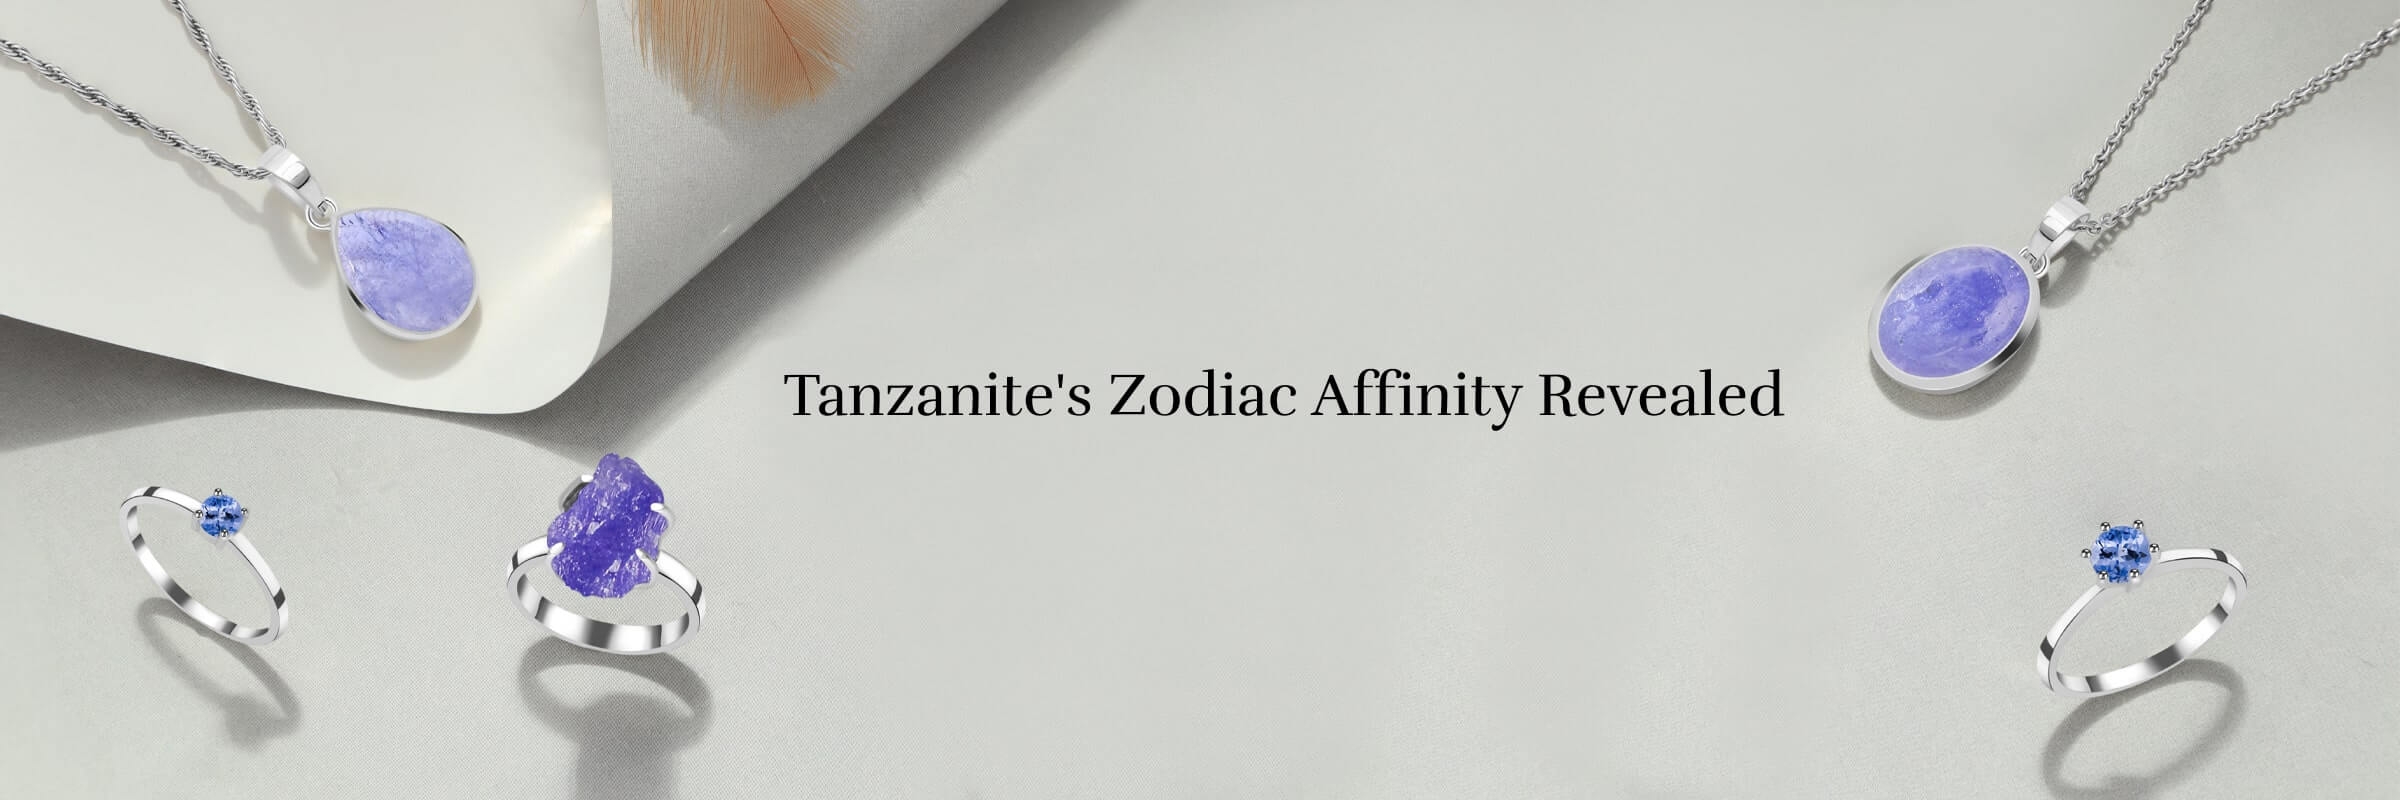 Zodiac sign associated with Tanzanite